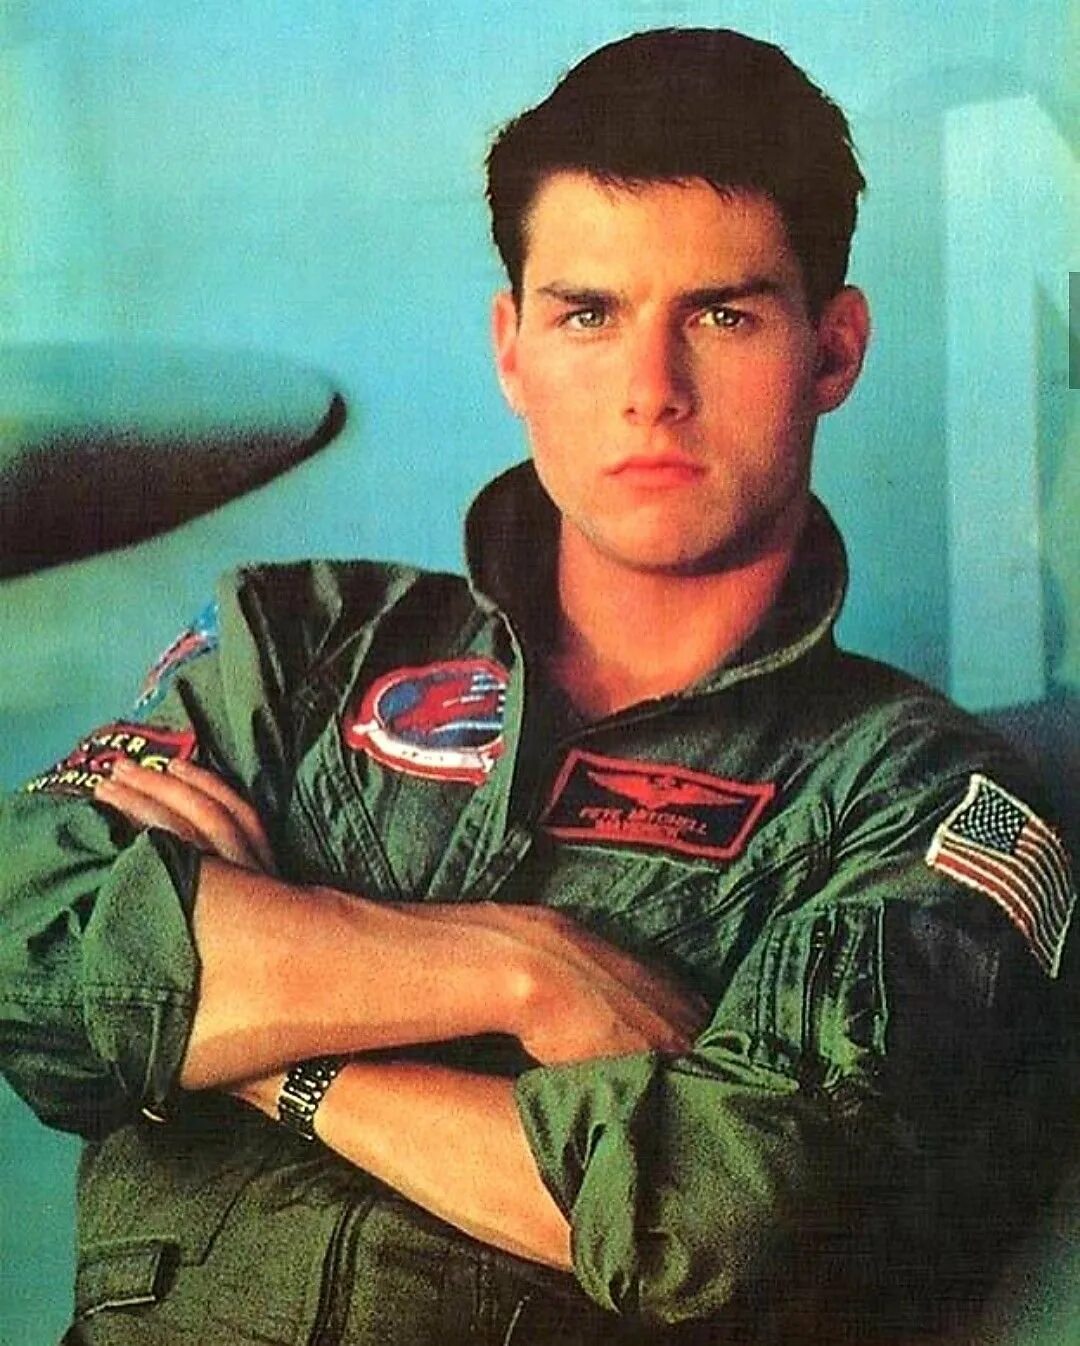 Лучший стрелок два. Top Gun том Круз. Том Круз 1986. Tom Cruise топ Ган.